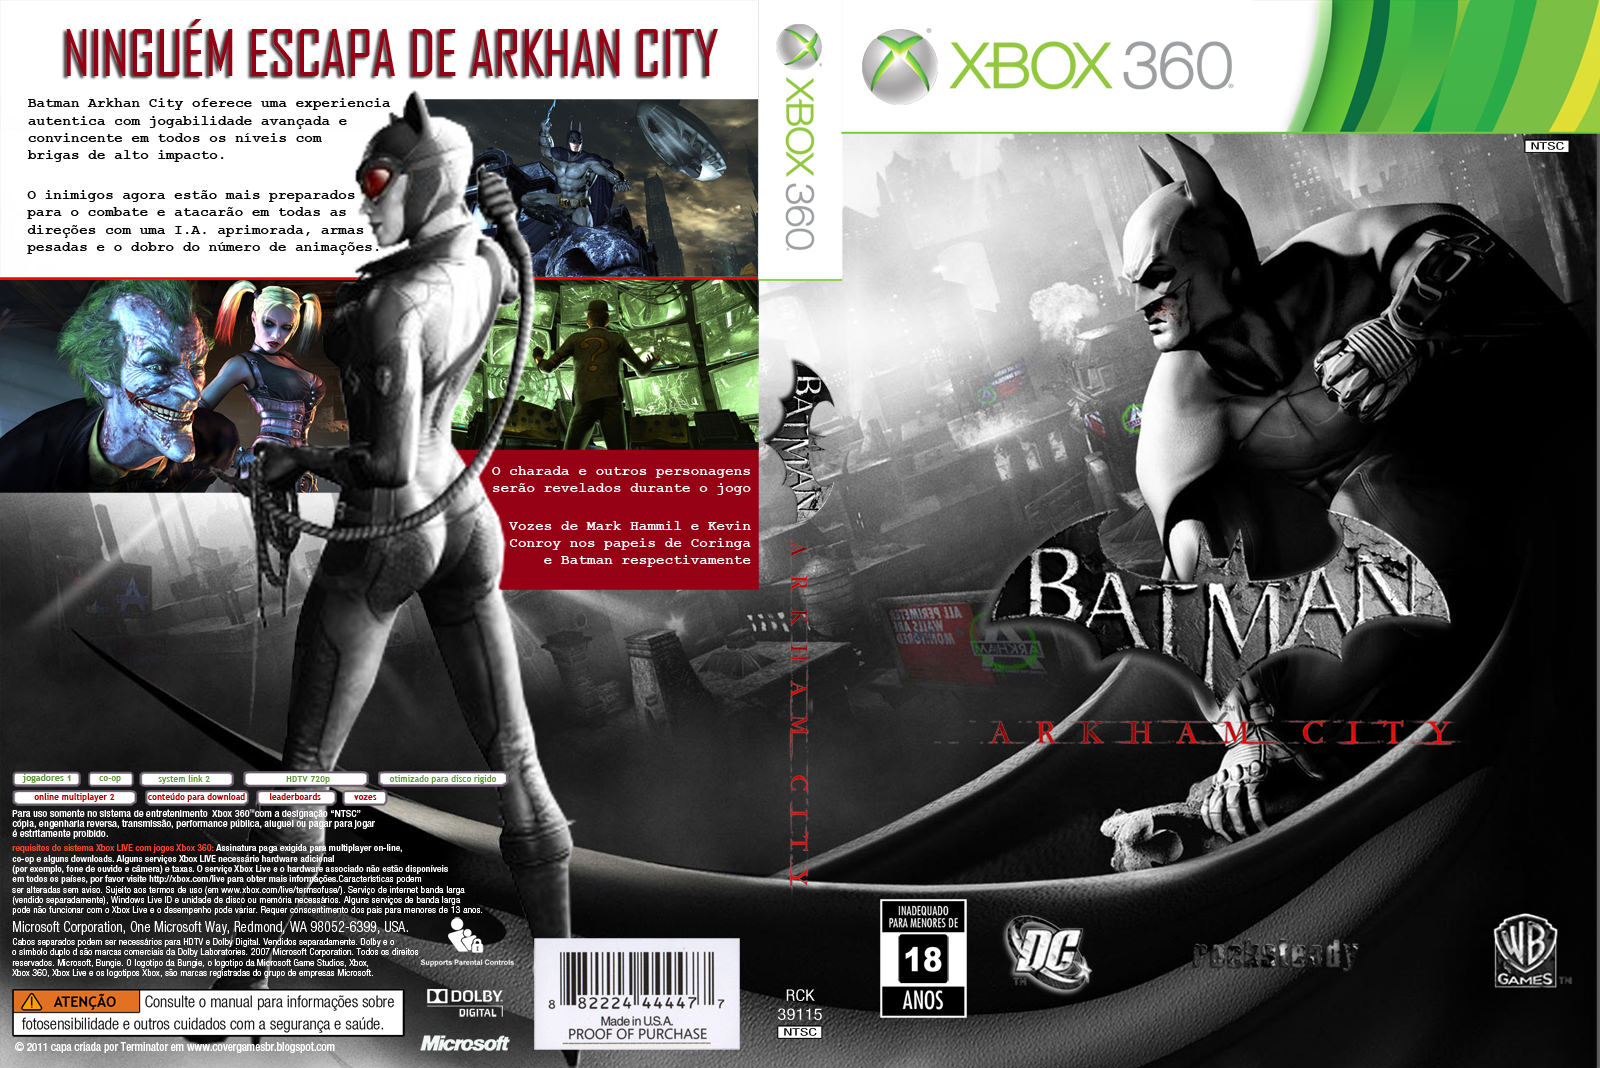 Batman xbox 360 freeboot. Бэтмен Аркхем Сити диск на Xbox 360. Диск Xbox 360 Batman Arkham City. Batman Arkham City Xbox 360. Batman Аркхем Сити Xbox 360.